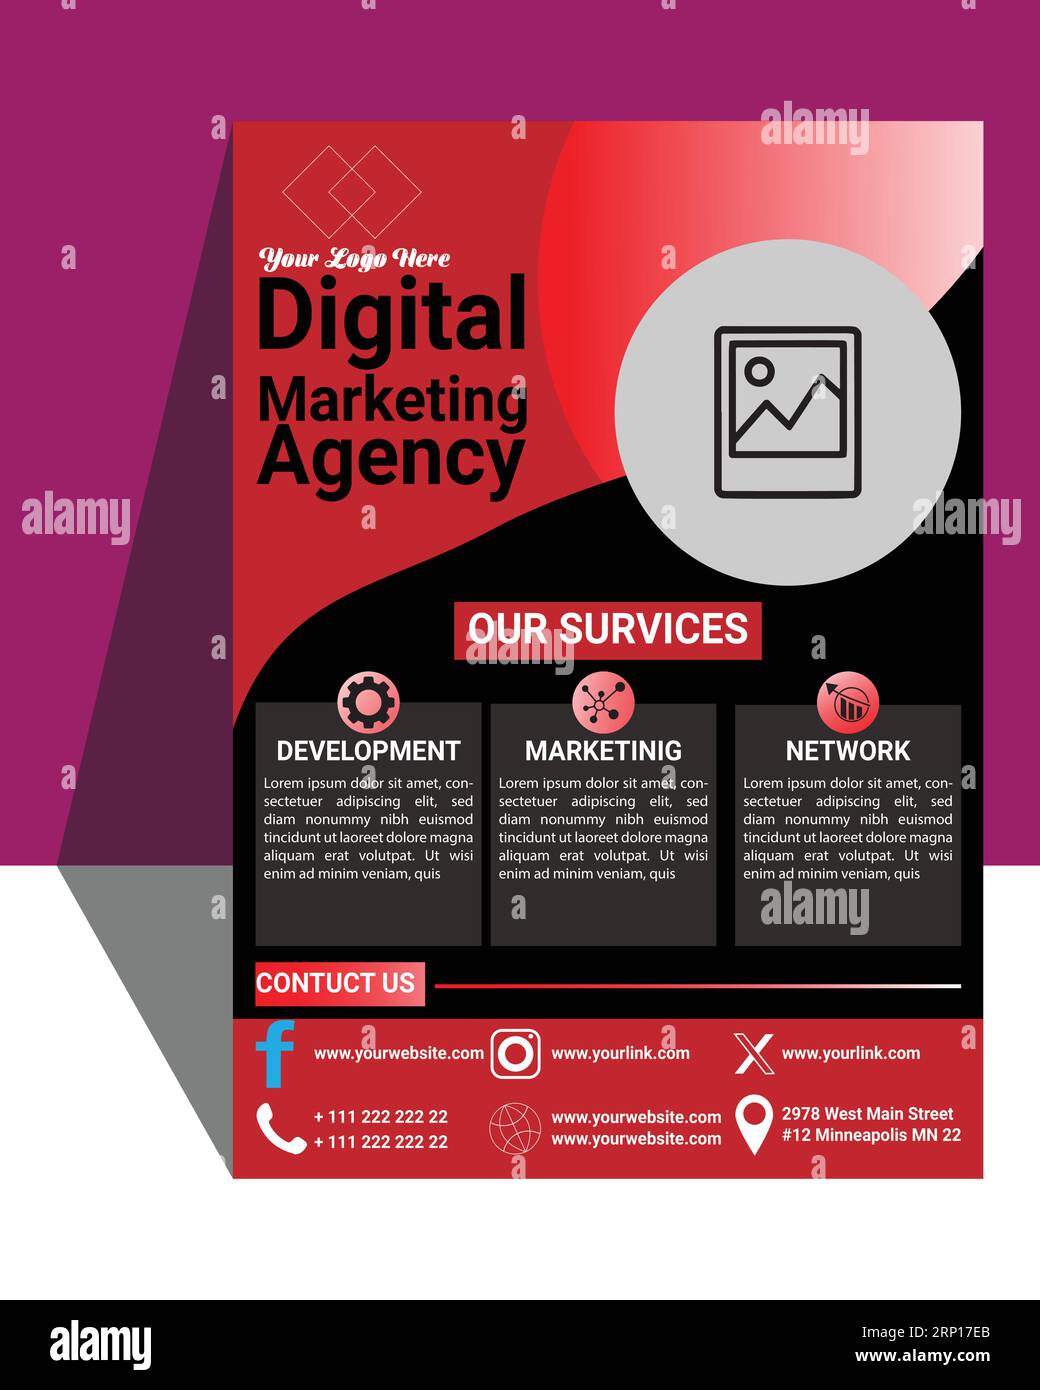 Digital Marketing Agency Flyer Design With Mockup Stock Vector